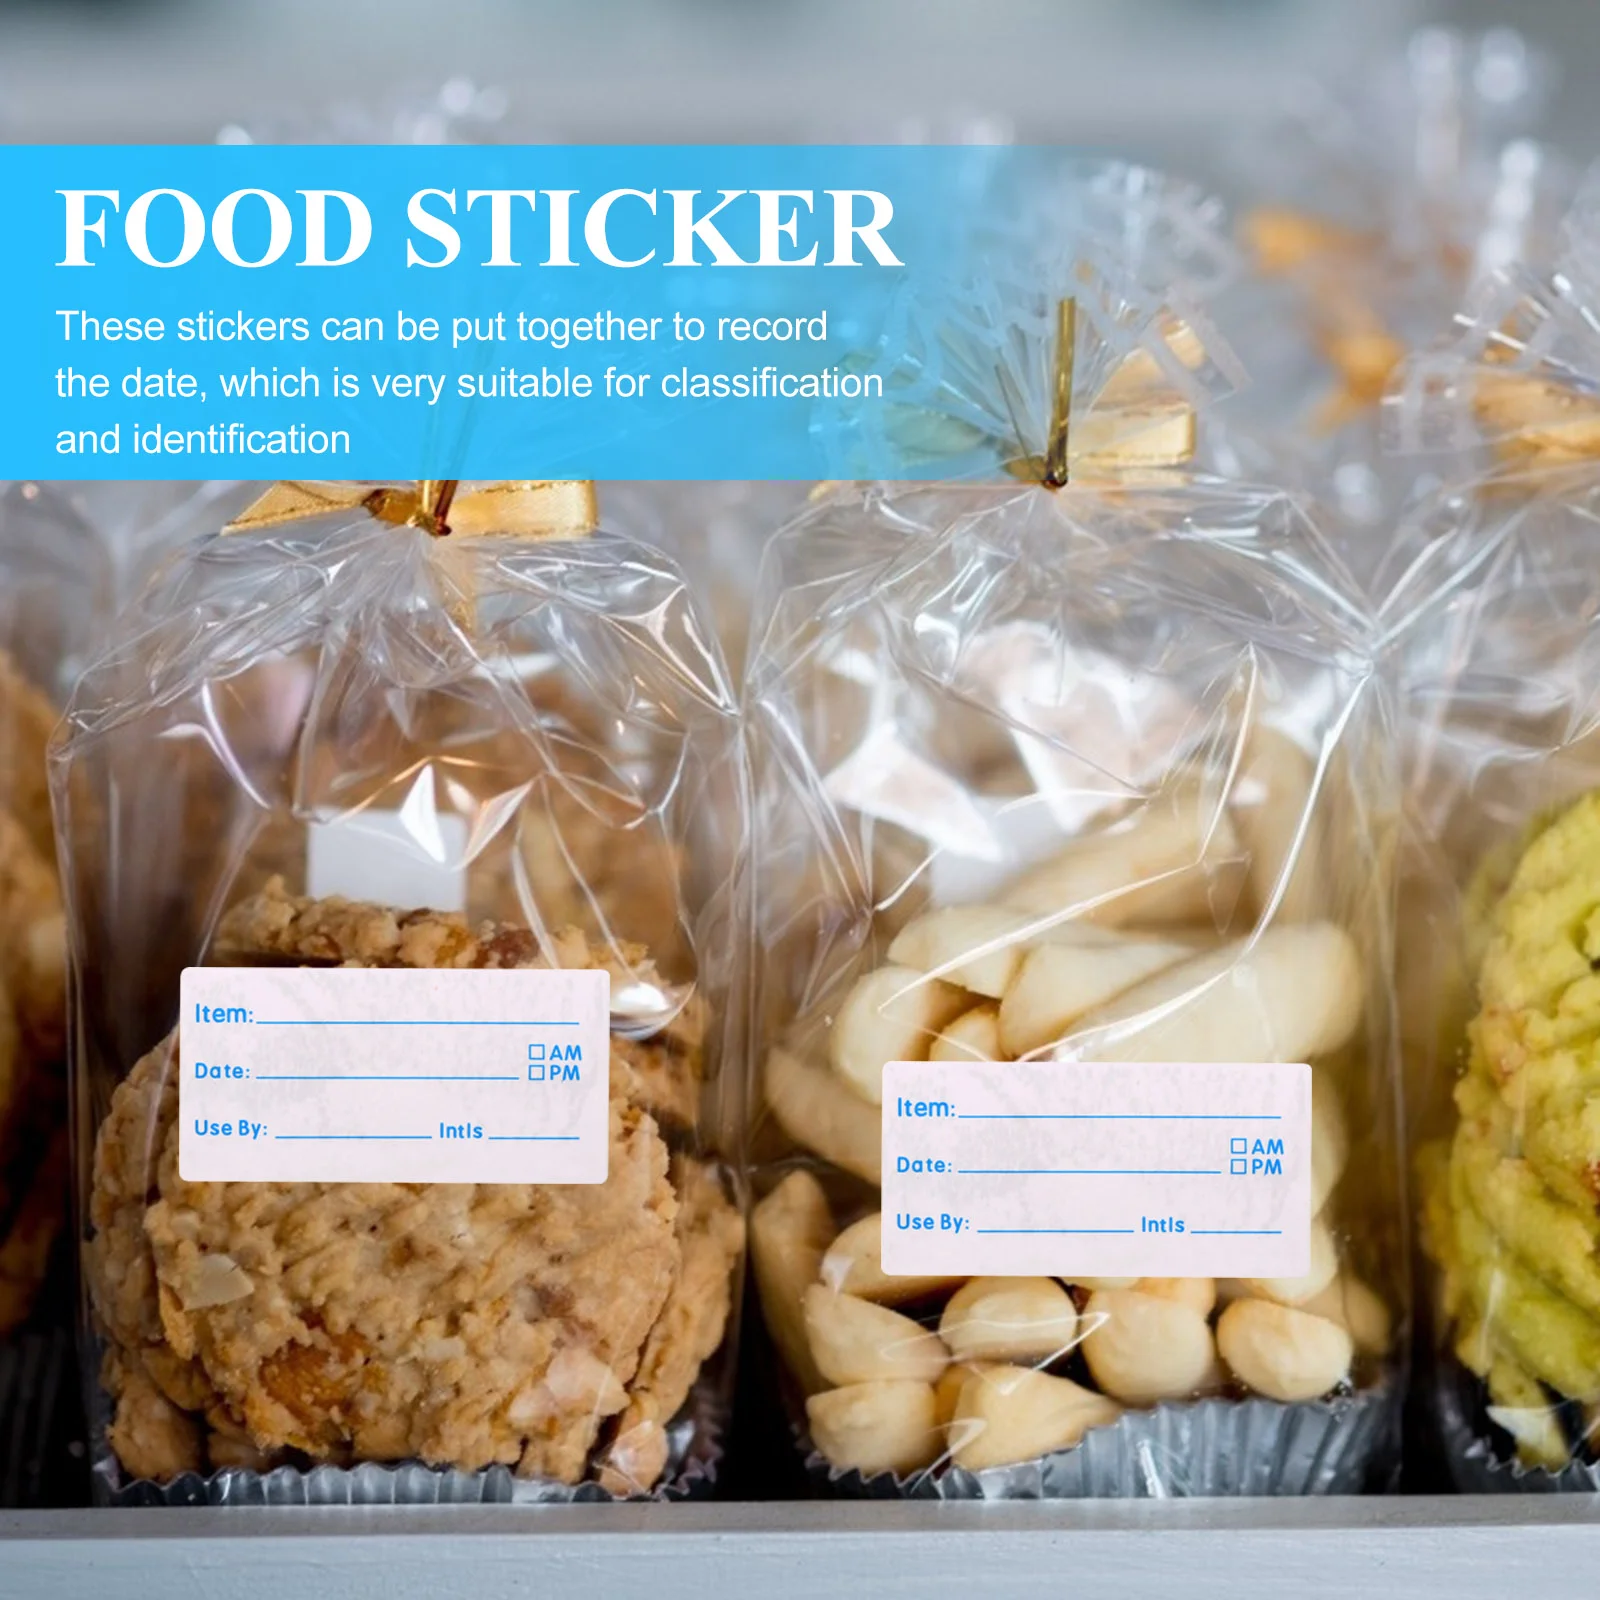 Labelsstickersstorage Containers Date Restaurant Sticker Packtrack Supplies Expiration Container Dissolvable Label Adhesive